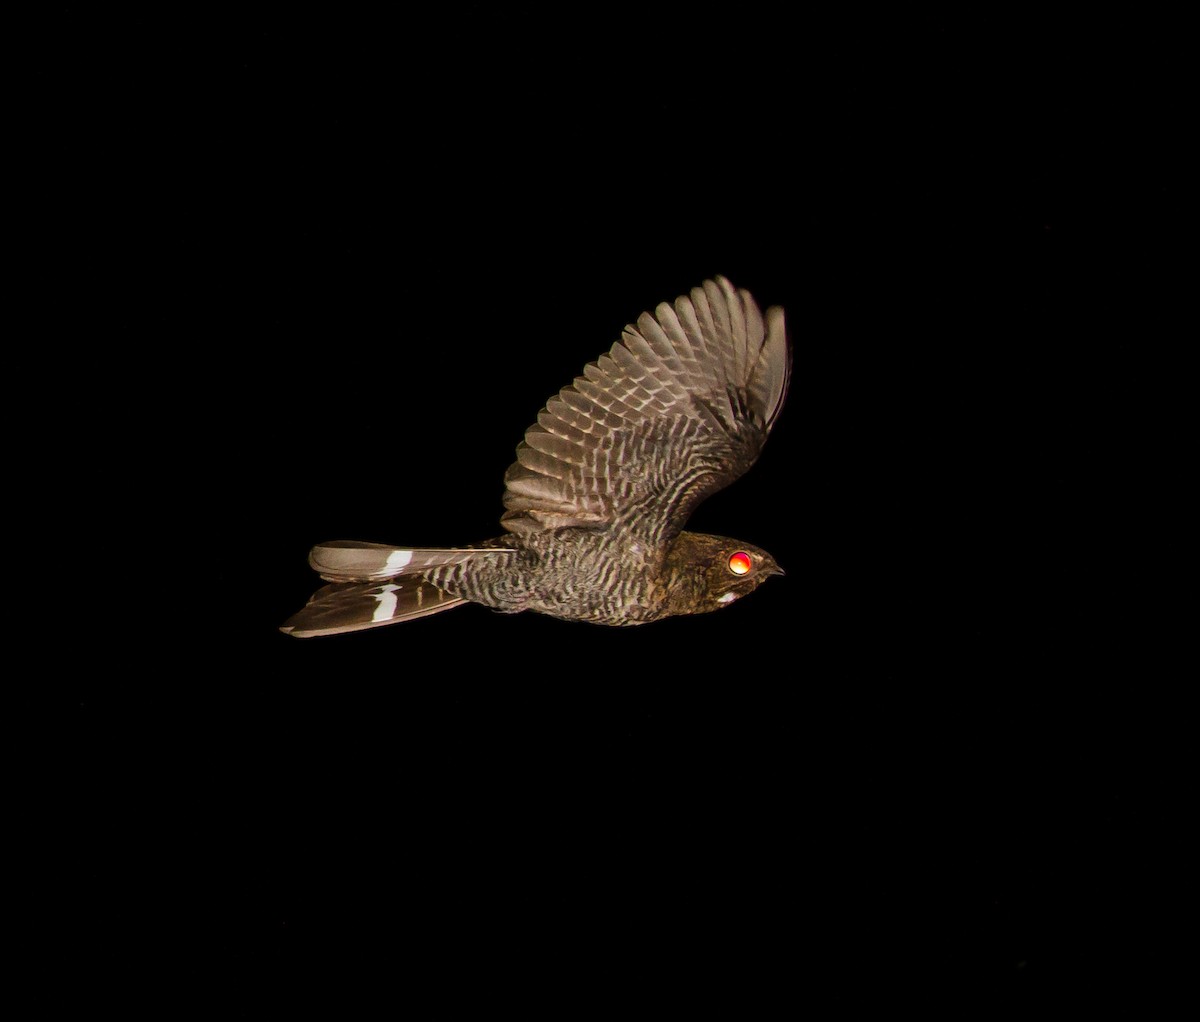 Band-tailed Nighthawk - Cullen Hanks